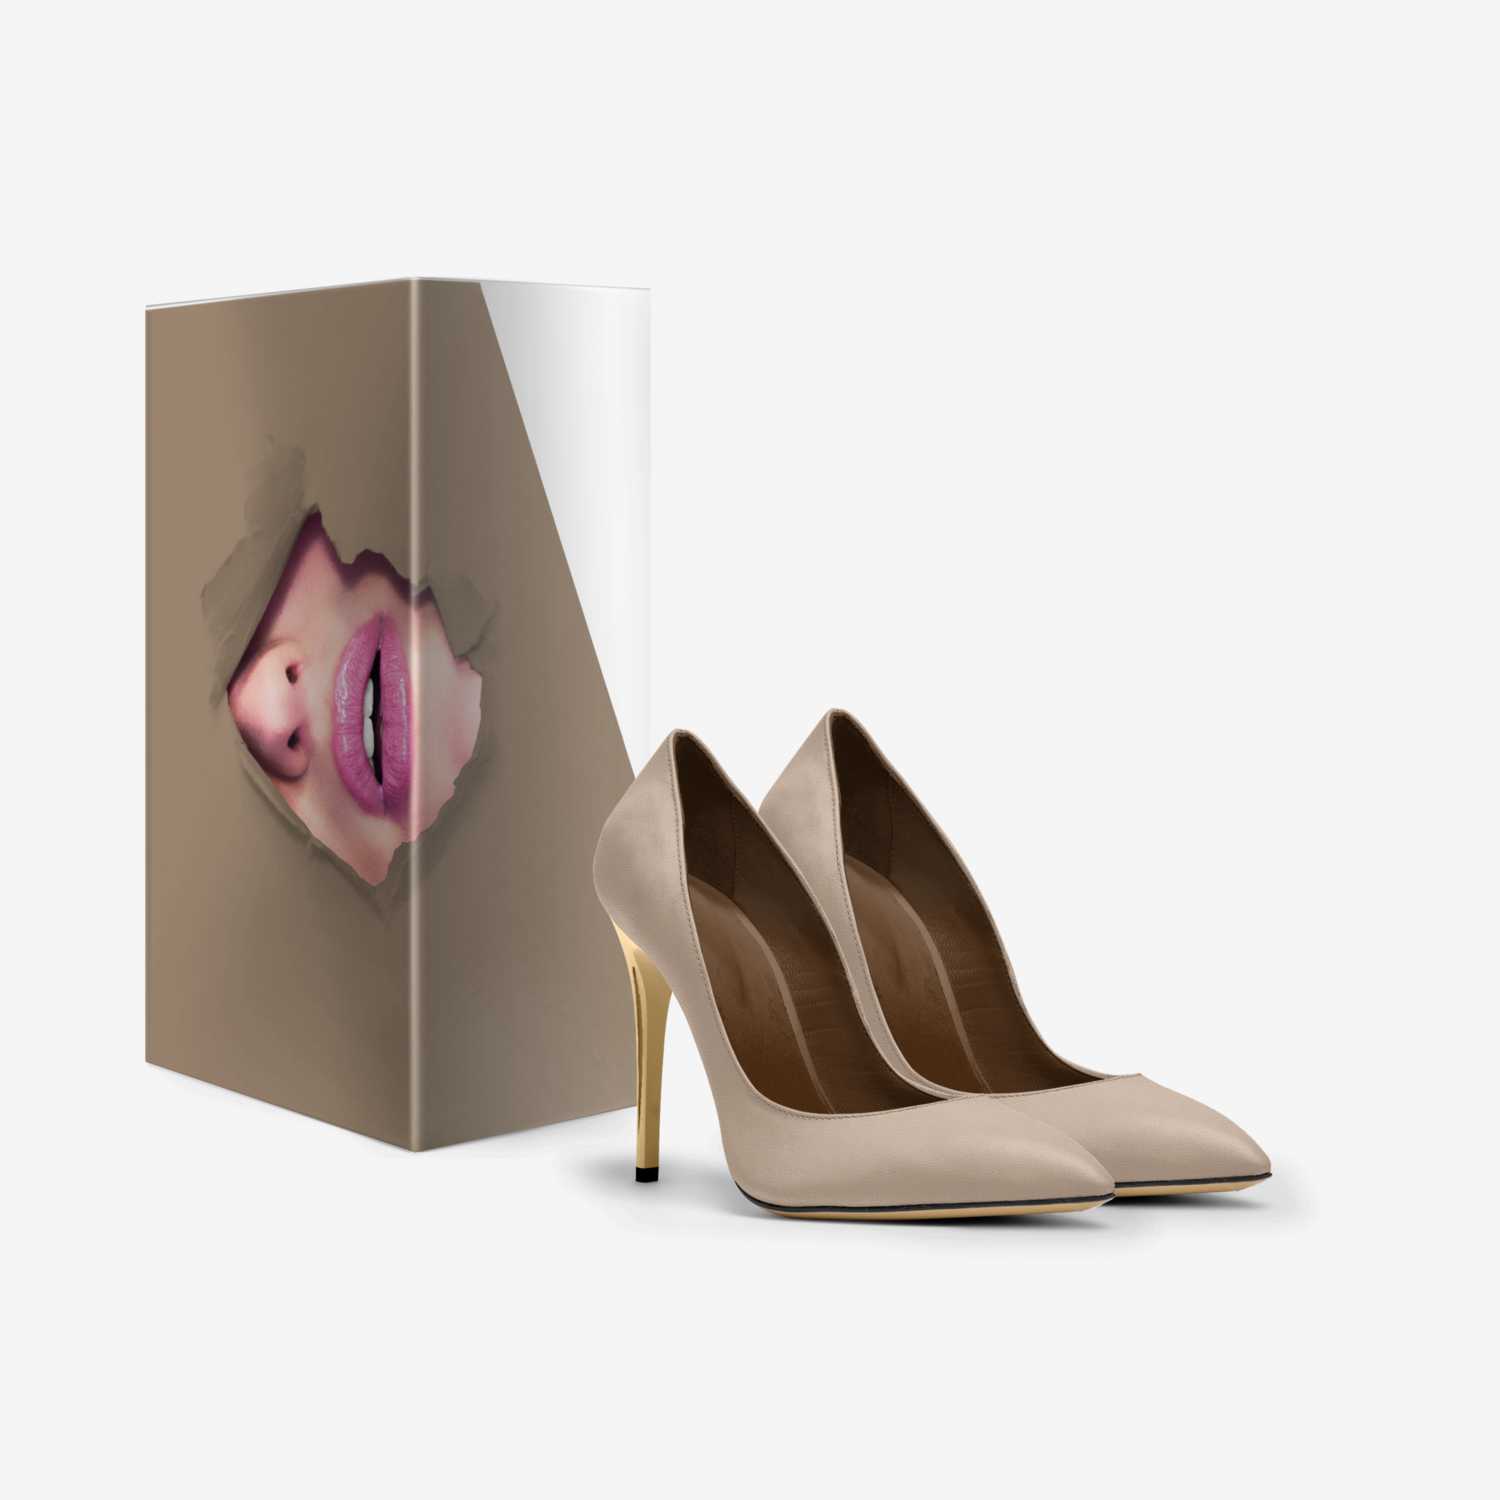 Patricia custom made in Italy shoes by Habib Kamara | Box view